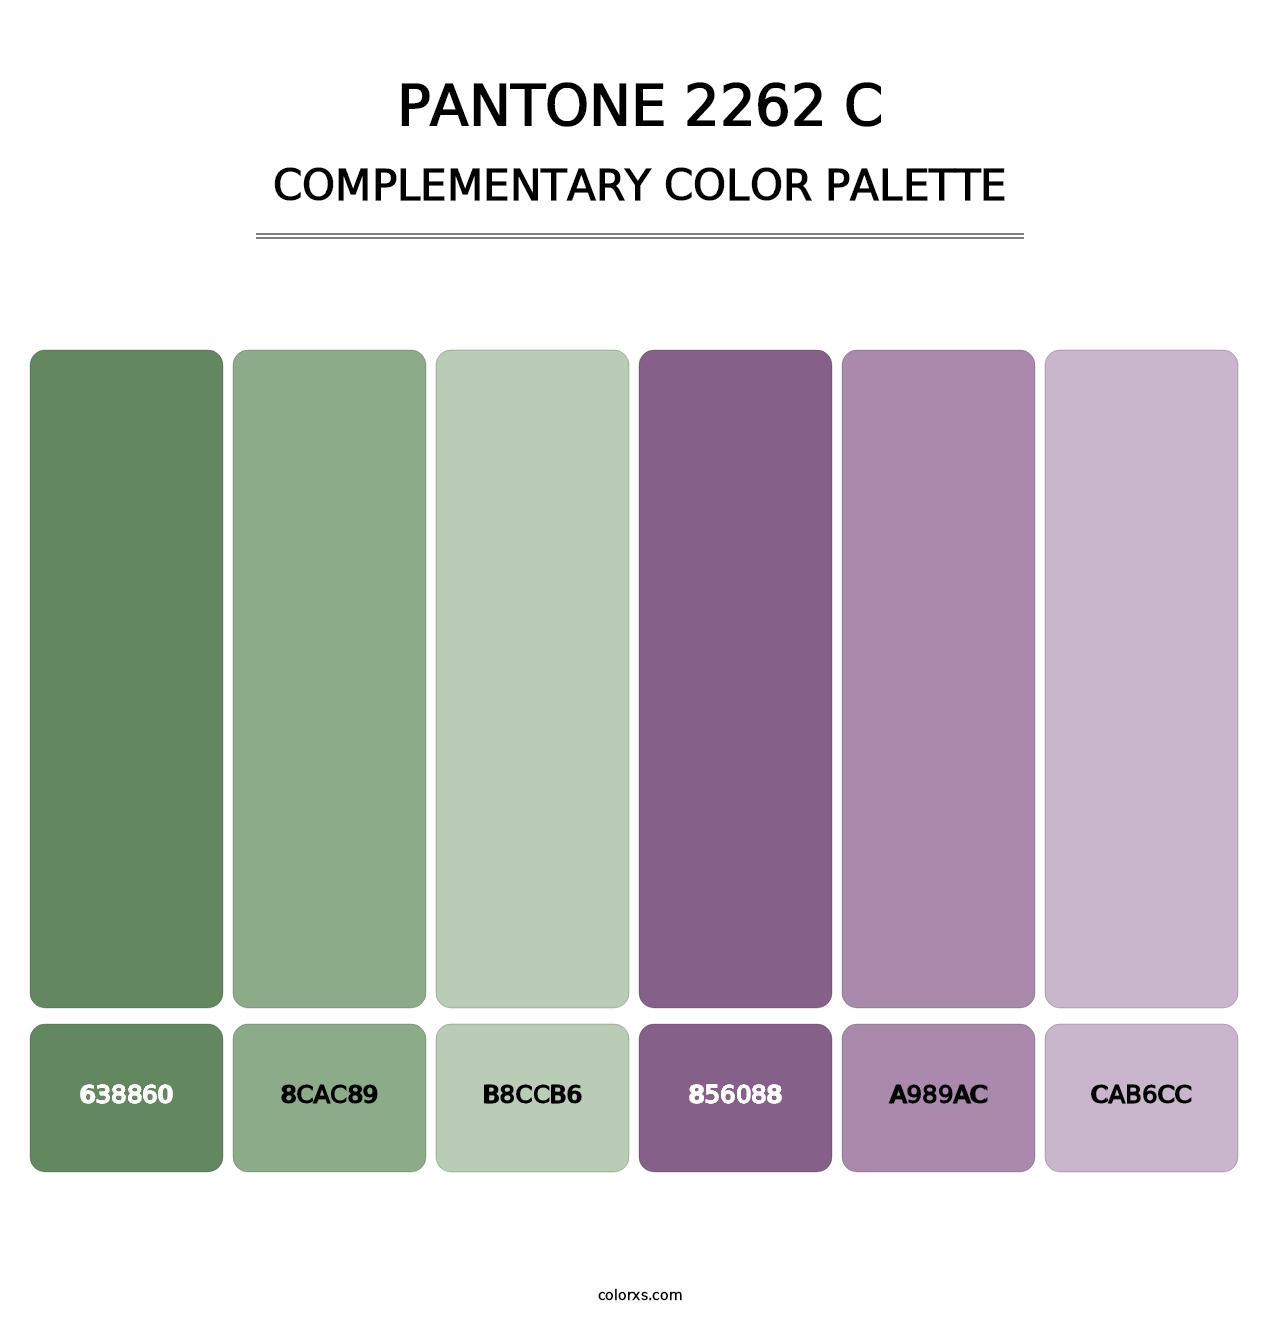 PANTONE 2262 C - Complementary Color Palette